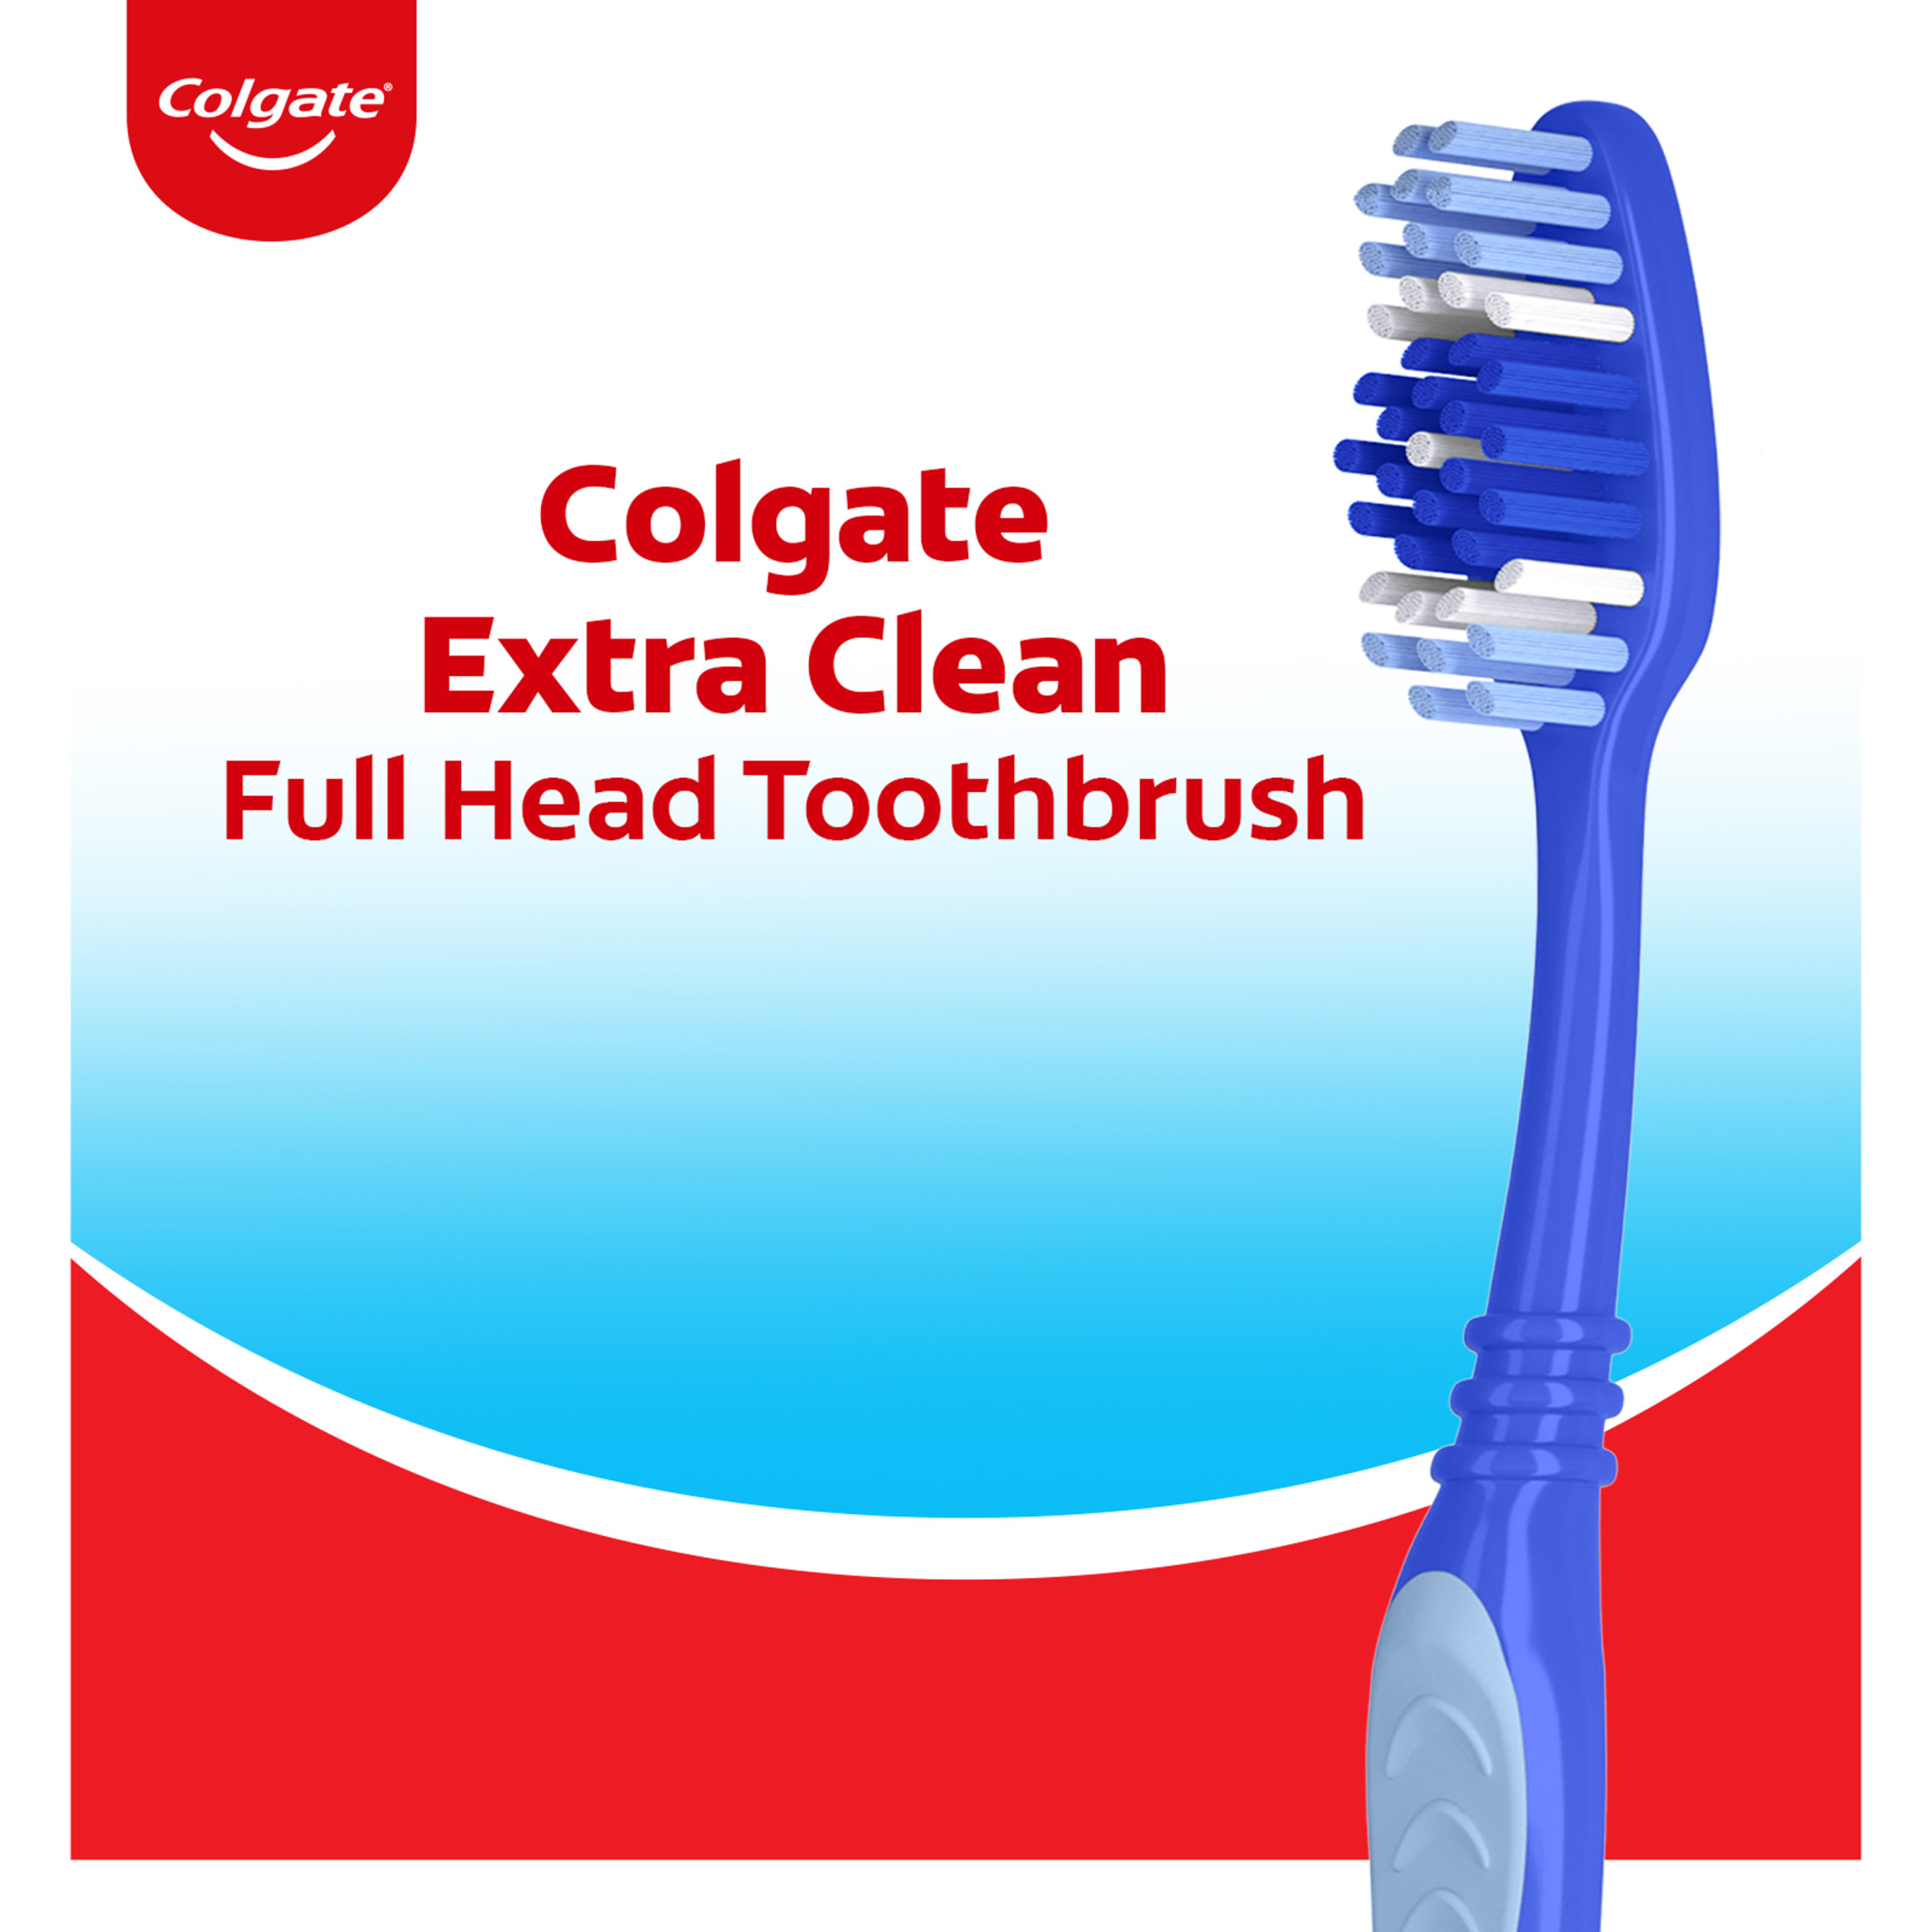 Colgate Extra Clean Toothbrush, Medium Bulk Toothbrush Pack, 6 Pack - image 2 of 10